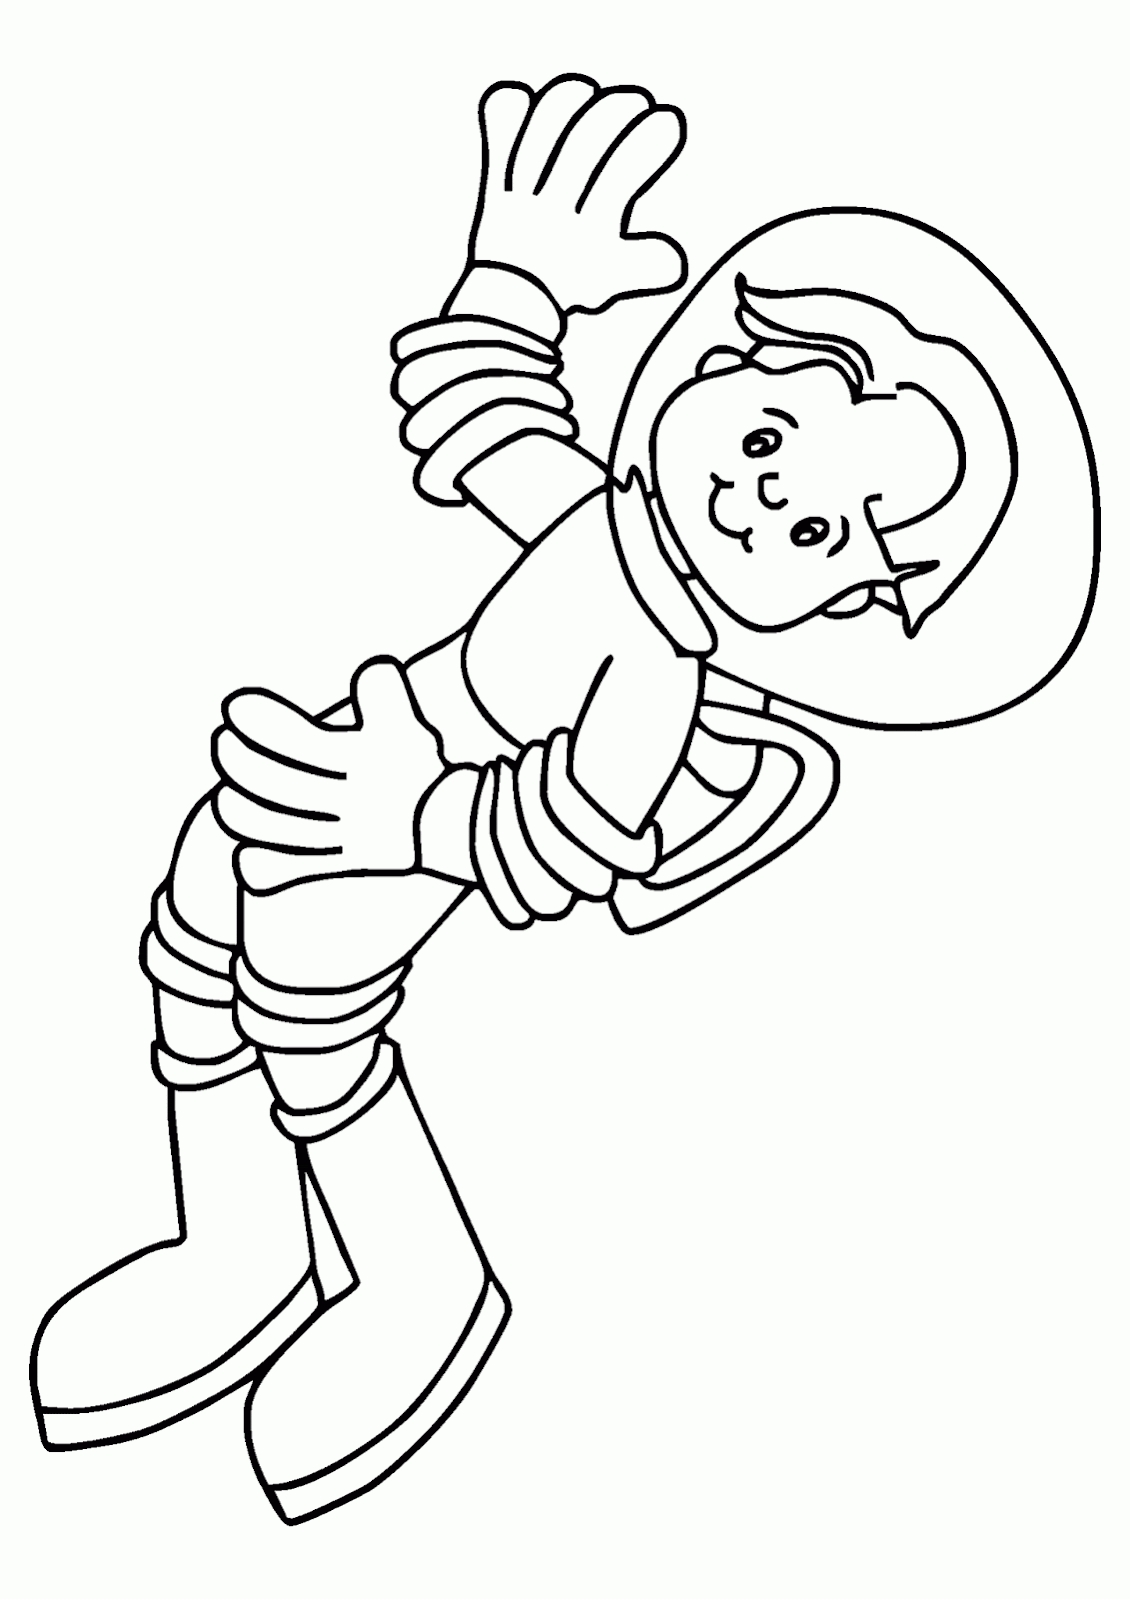 Gambar Mewarnai Astronot Antariksawan Contoh Anak Paud Download Animasi